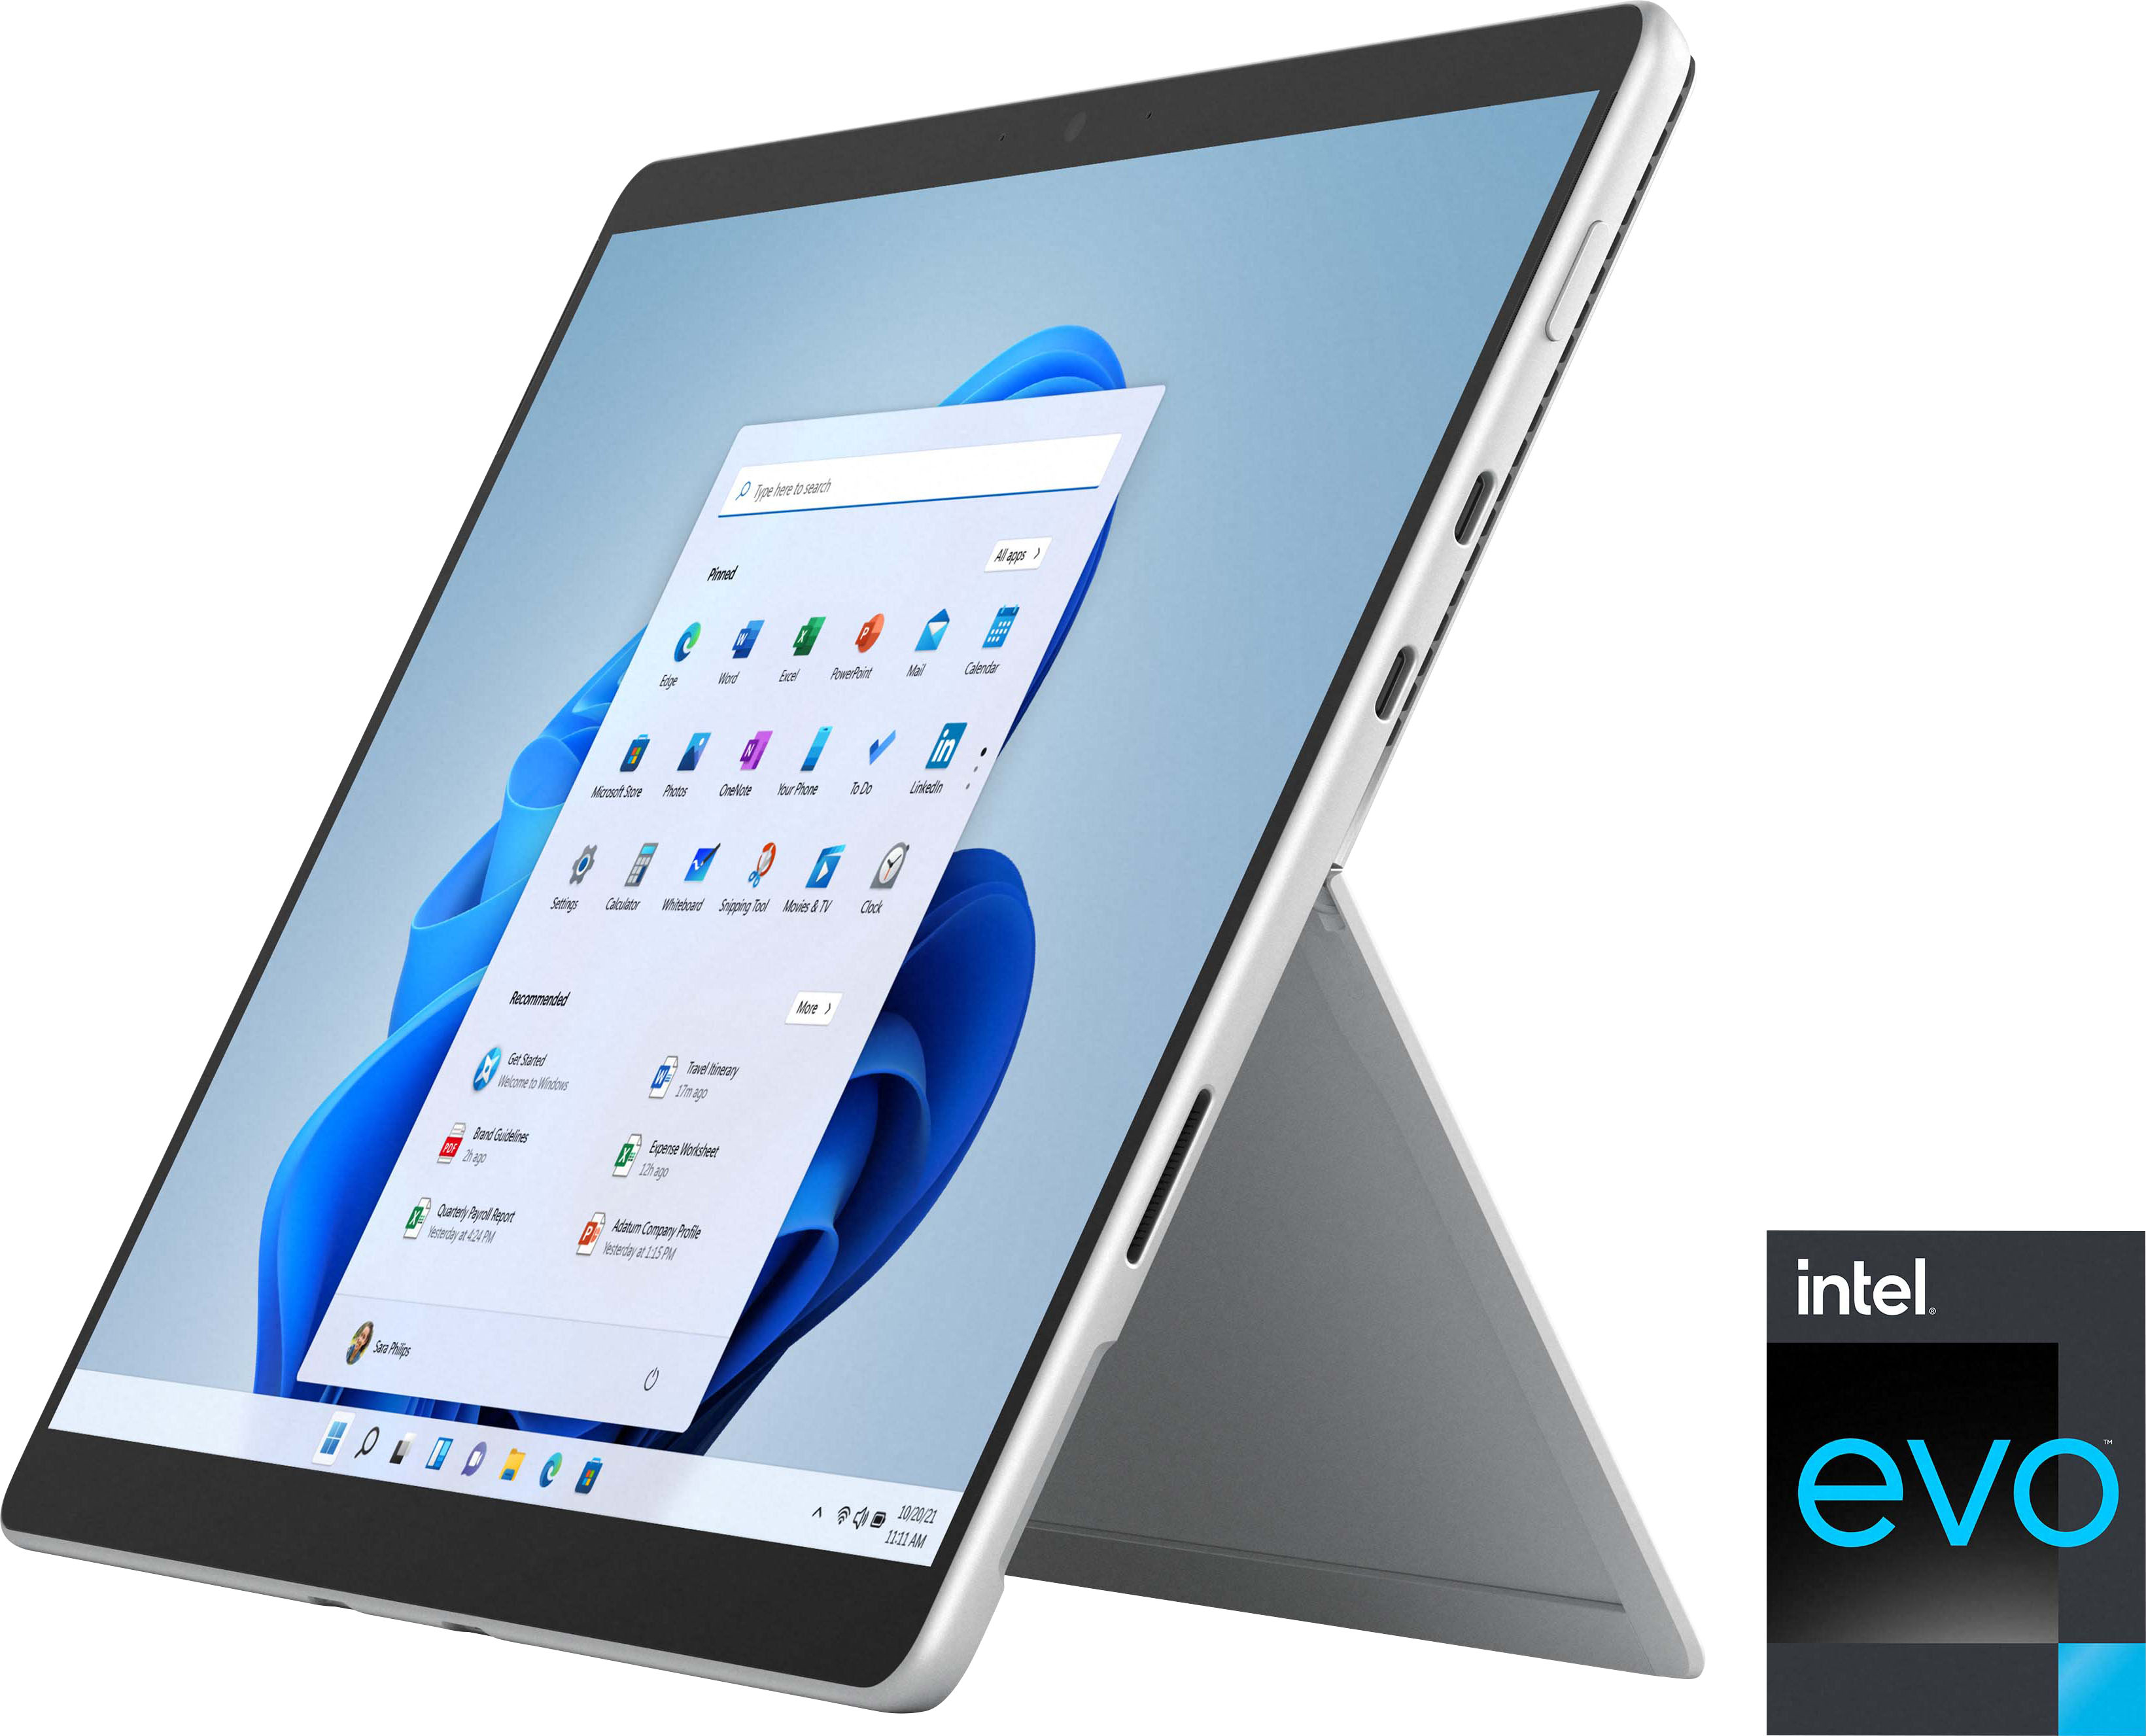 8 inch Windows 10 Tablet with SLS Software (AR1) - Spirit Tech